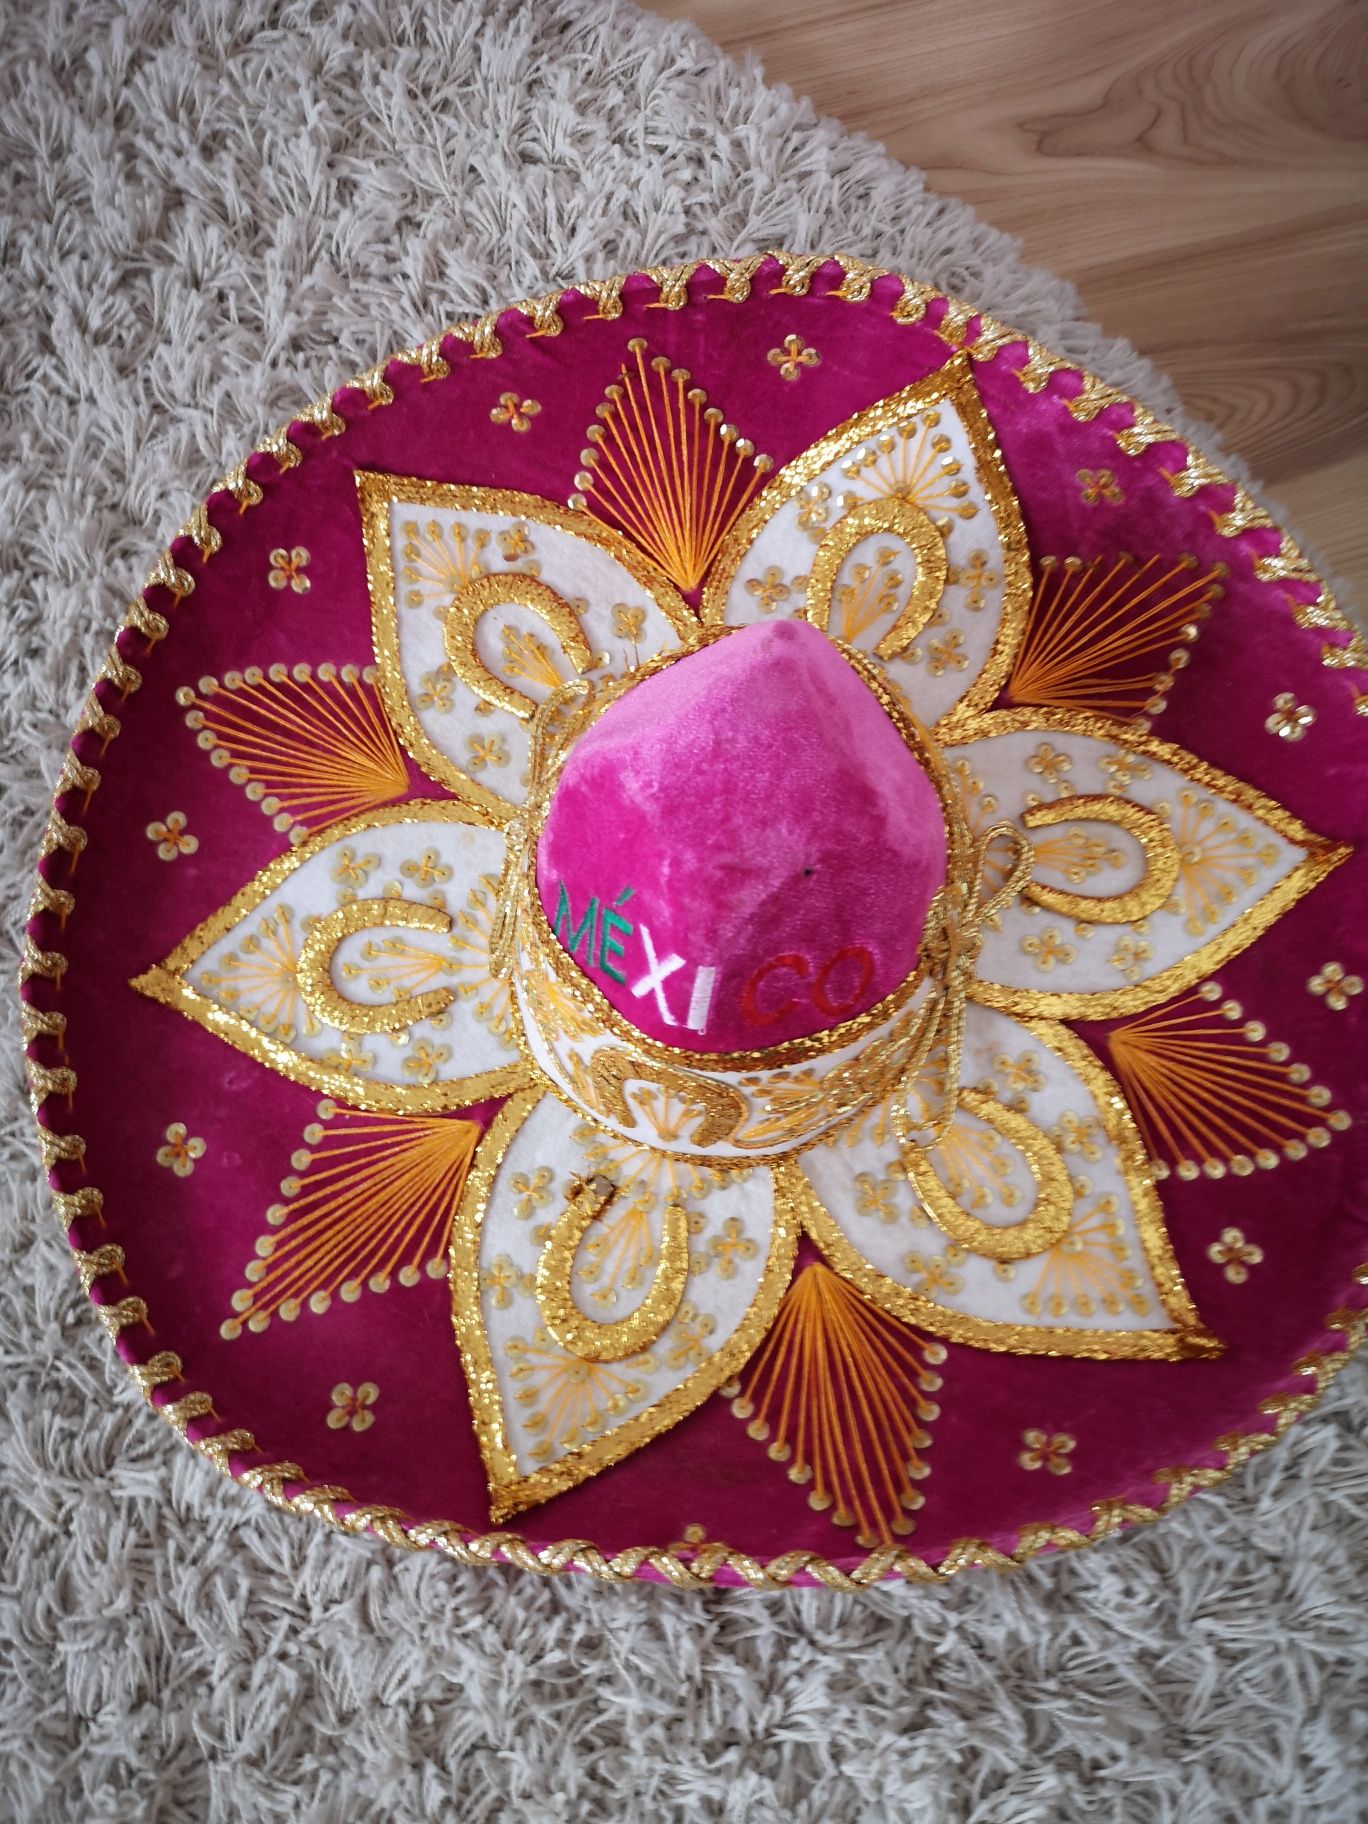 Kapelusz meksykański Sombrero meksykańskie oryginalne